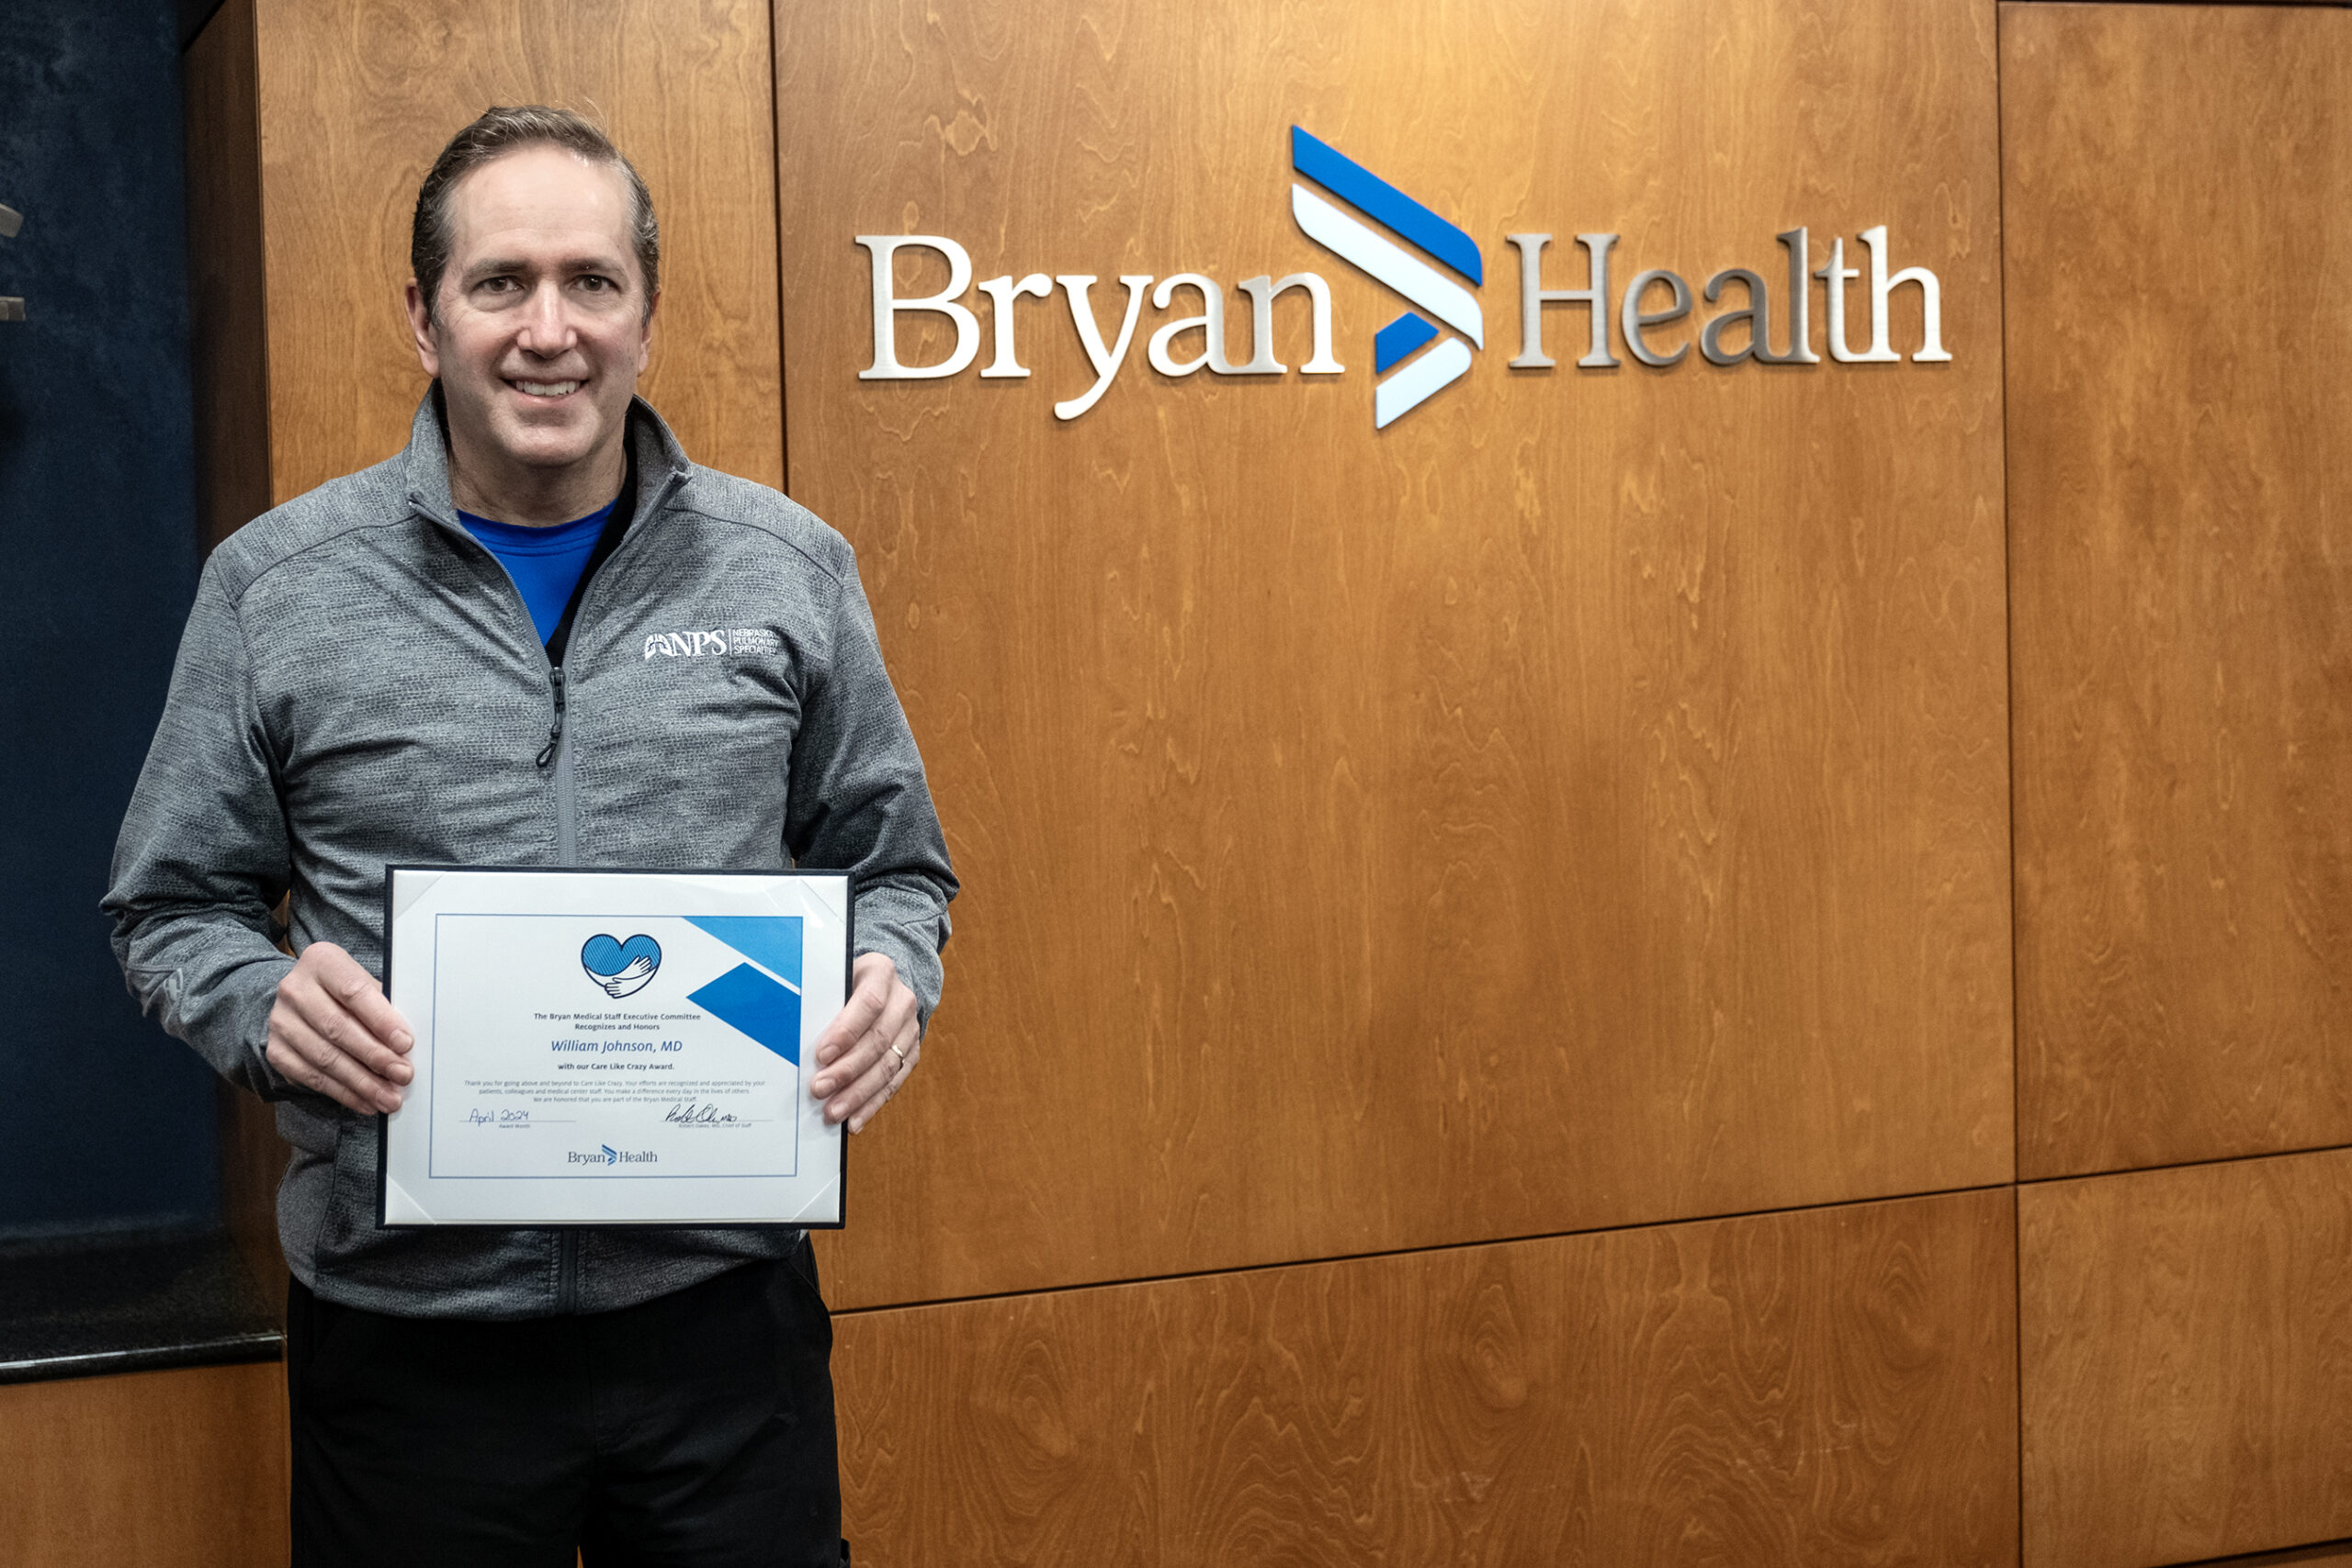 William Johnson MD, Receives Bryan Medical Center Care Like Crazy Award